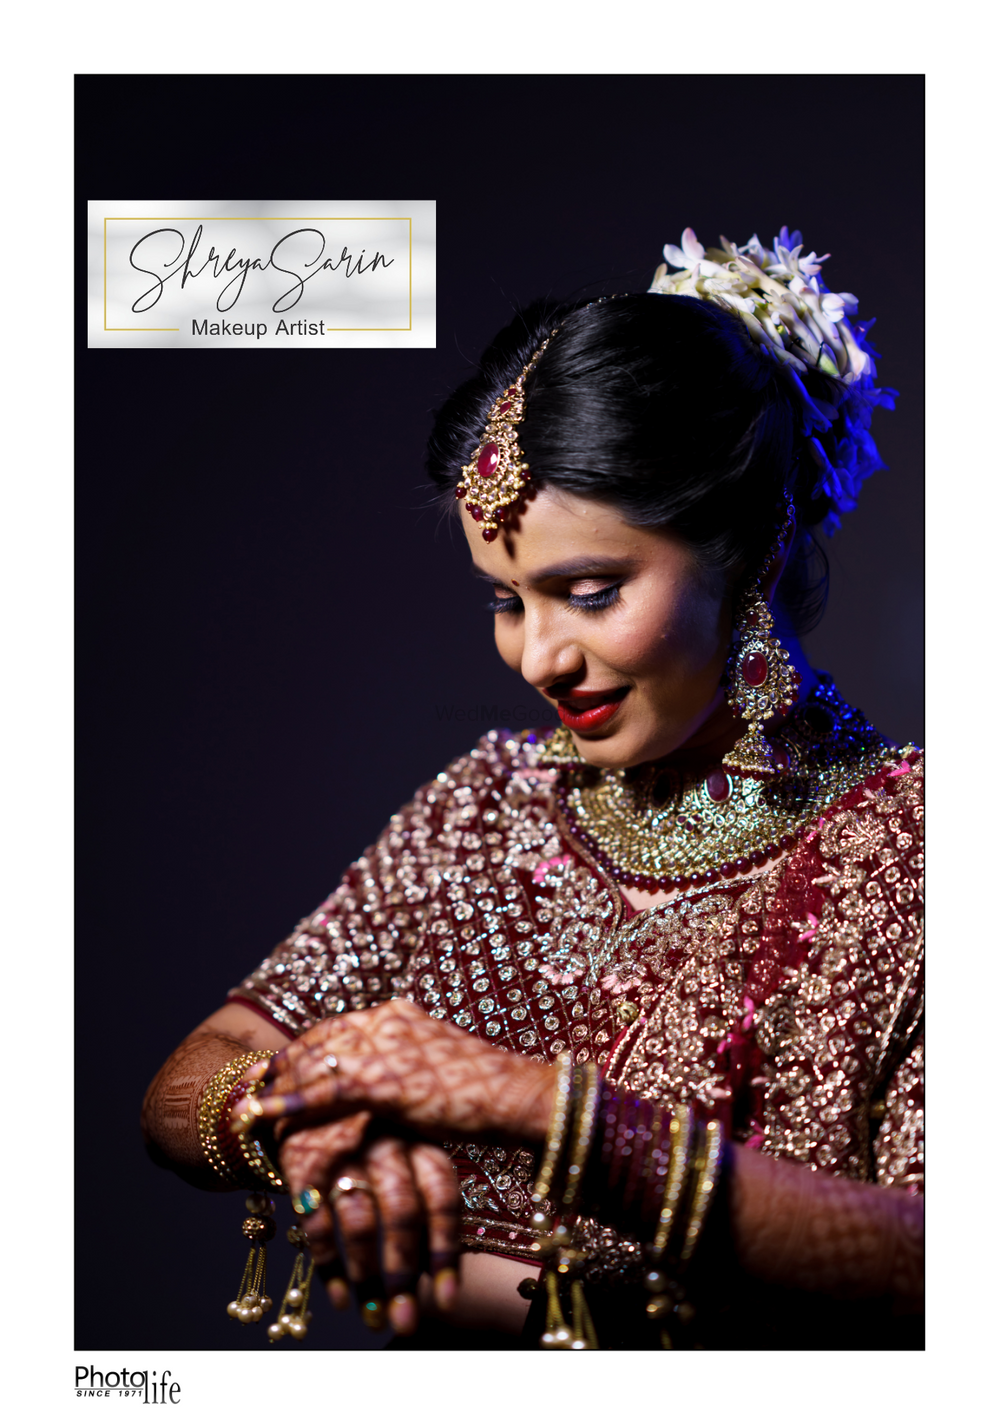 Photo From Bridal Airbrush Makeup - By Glow Glam by Shreya Sarin